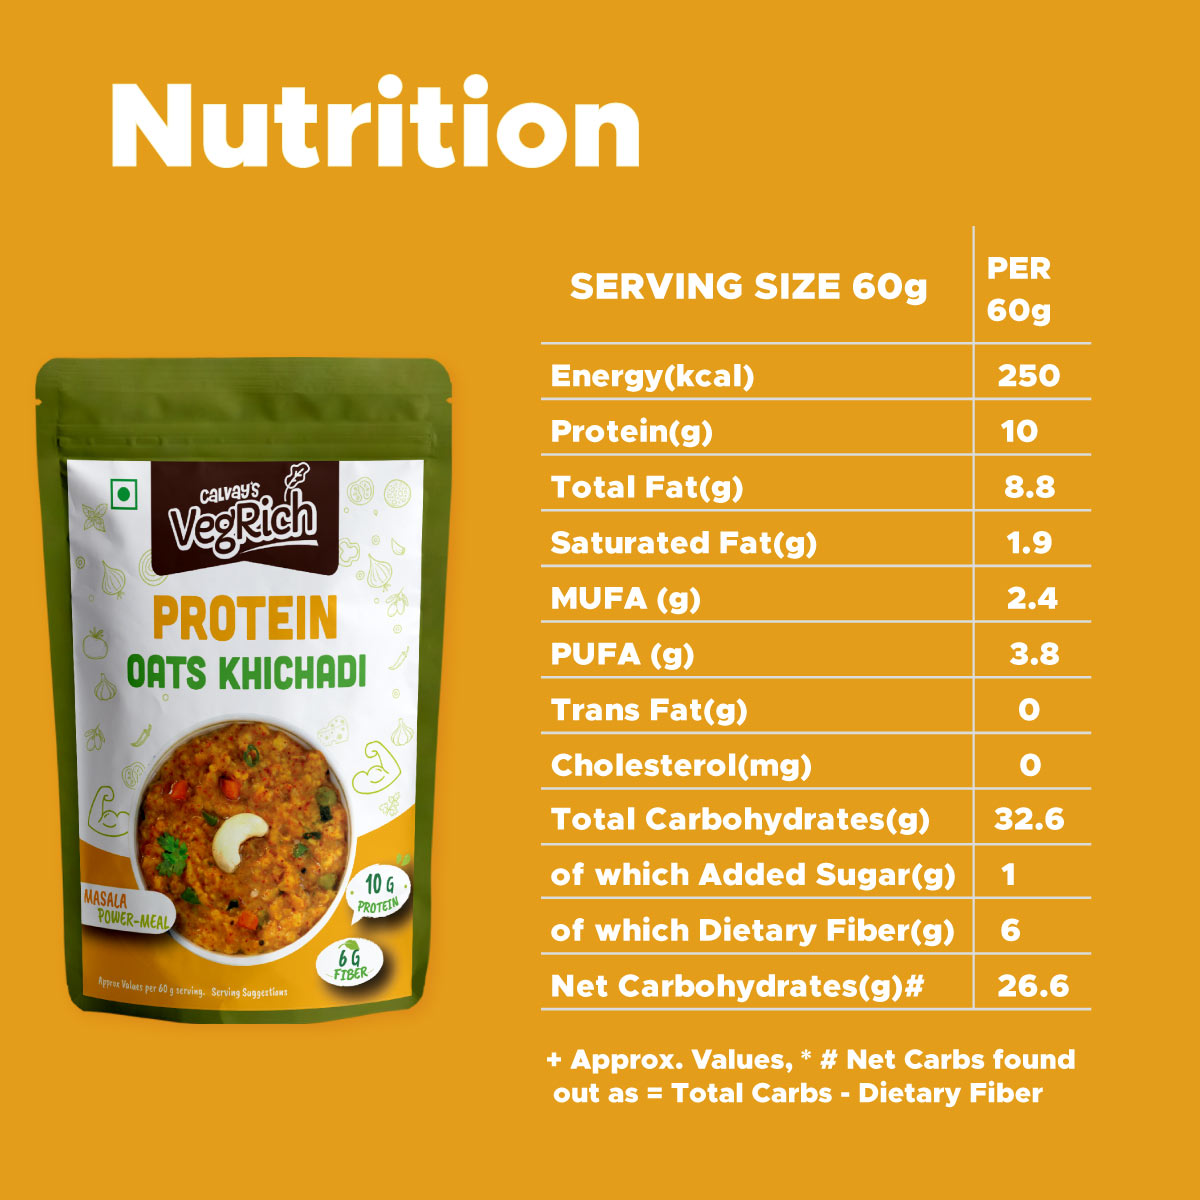 nutritional information of protein khichadi